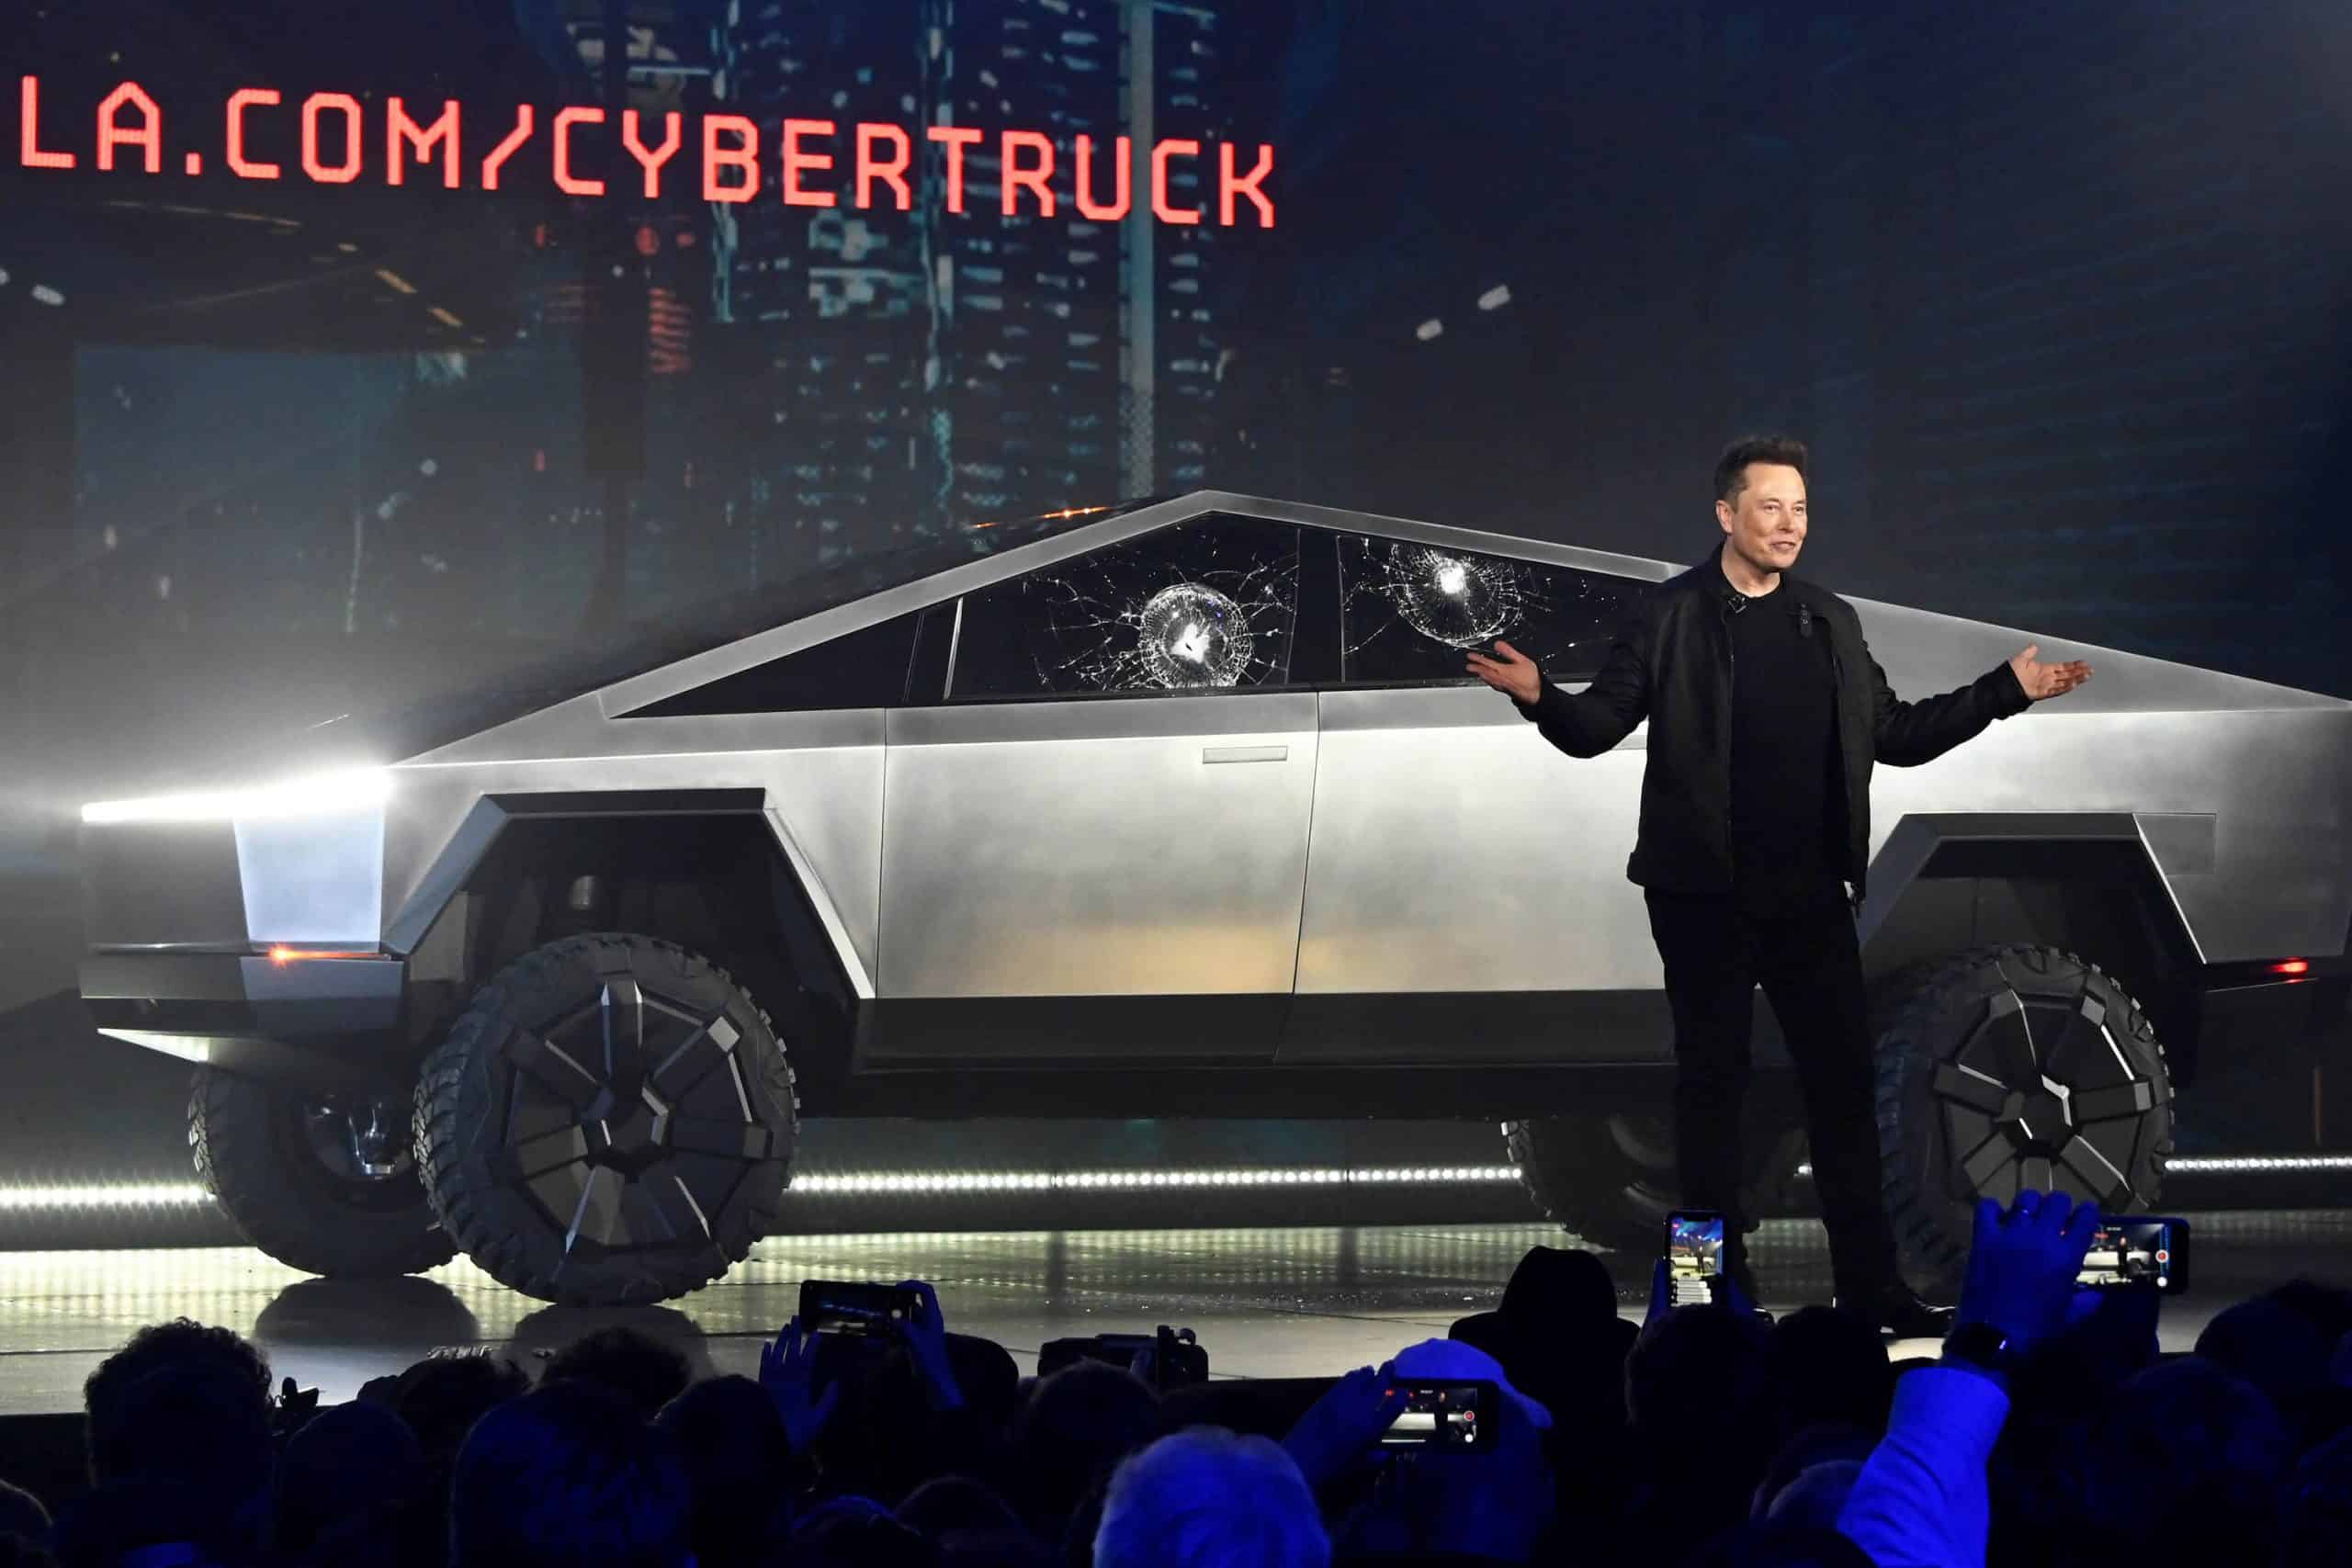 James Bond Lotus sports car Elon Musk bought inspired Tesla Cybertruck